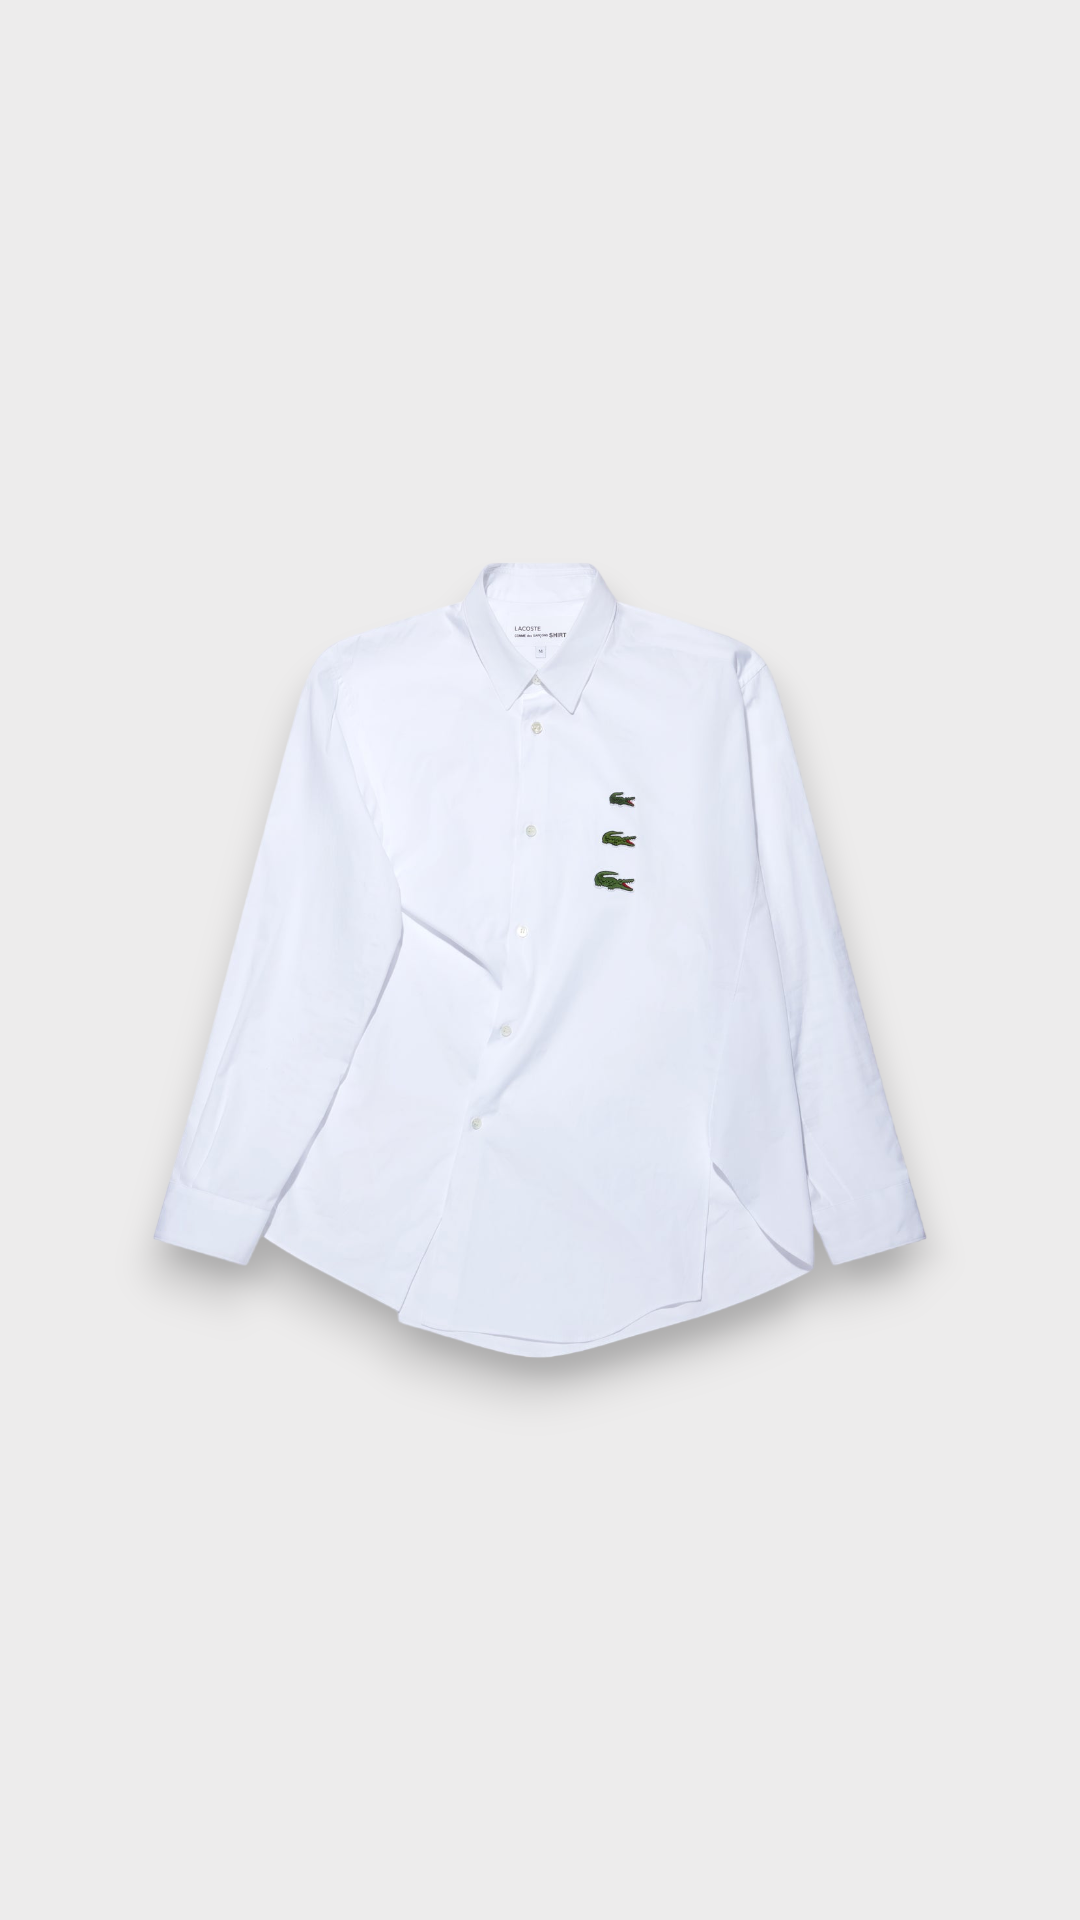 CDG Shirt x Lacoste / Men's Asymmetric Shirt